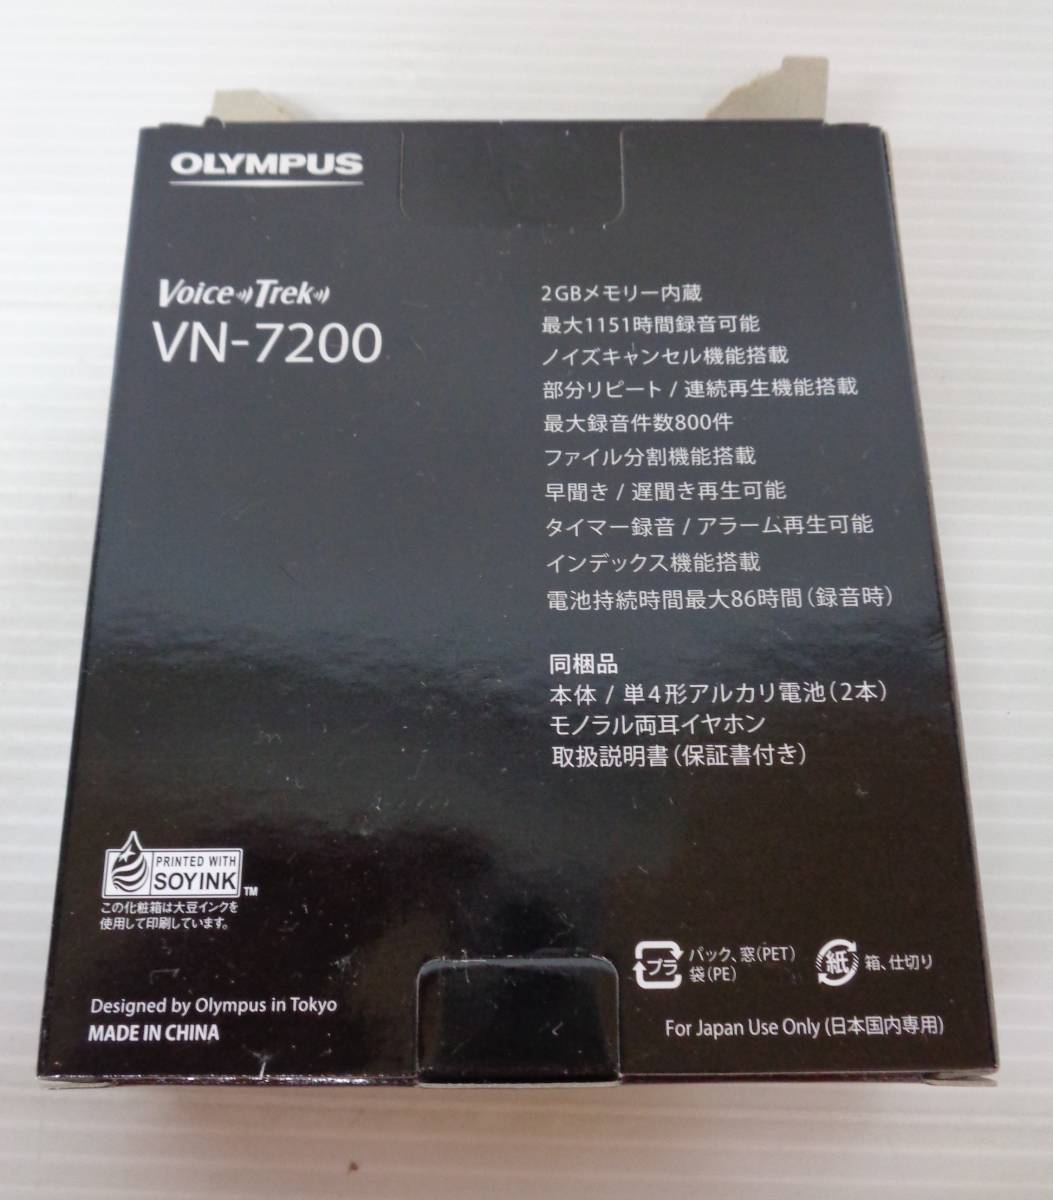 *[ junk ]OLYMPUS Olympus Voice-Trek voice Trek voice recorder VN-7200 white manual original box *